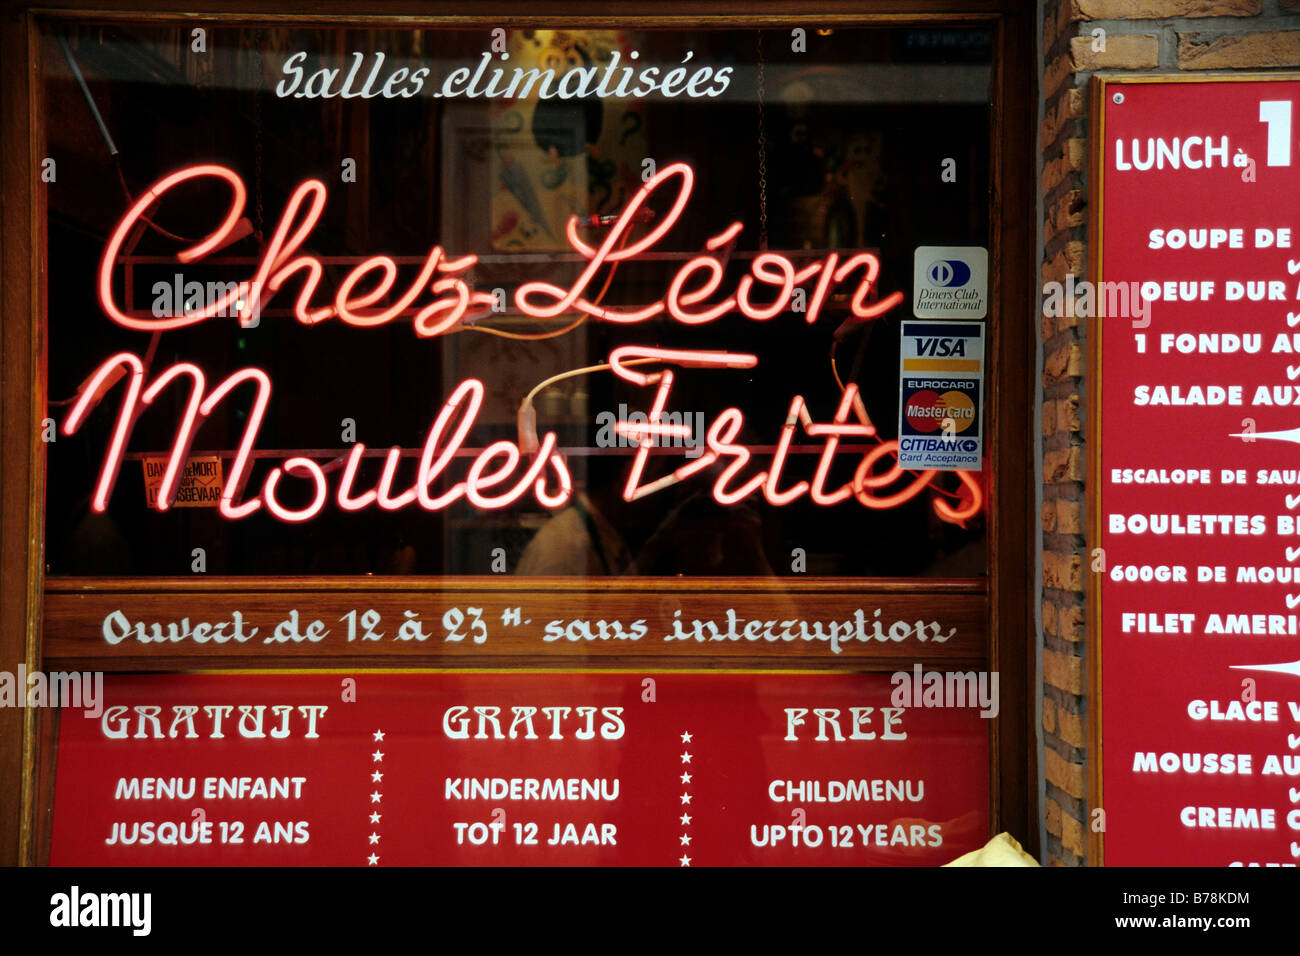 Chez Leon, Moules Frites, illuminated writing in a restaurant window, Rue des Bouchers, Ilot Sacre, Brussels, Belgum, Benelux,  Stock Photo